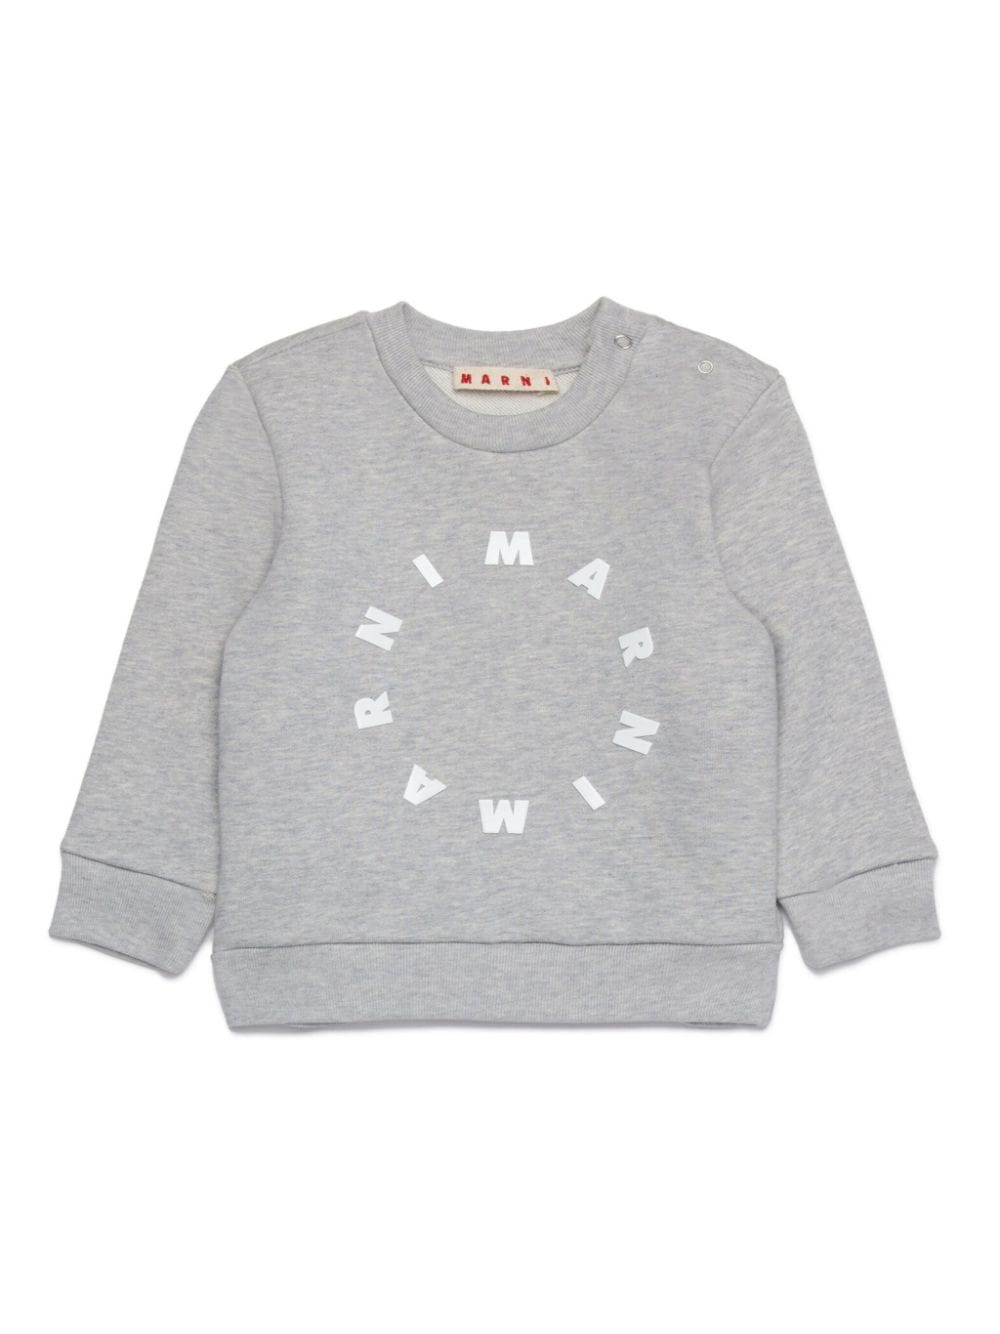 Marni Kids logo-print jersey sweatshirt - Grey von Marni Kids